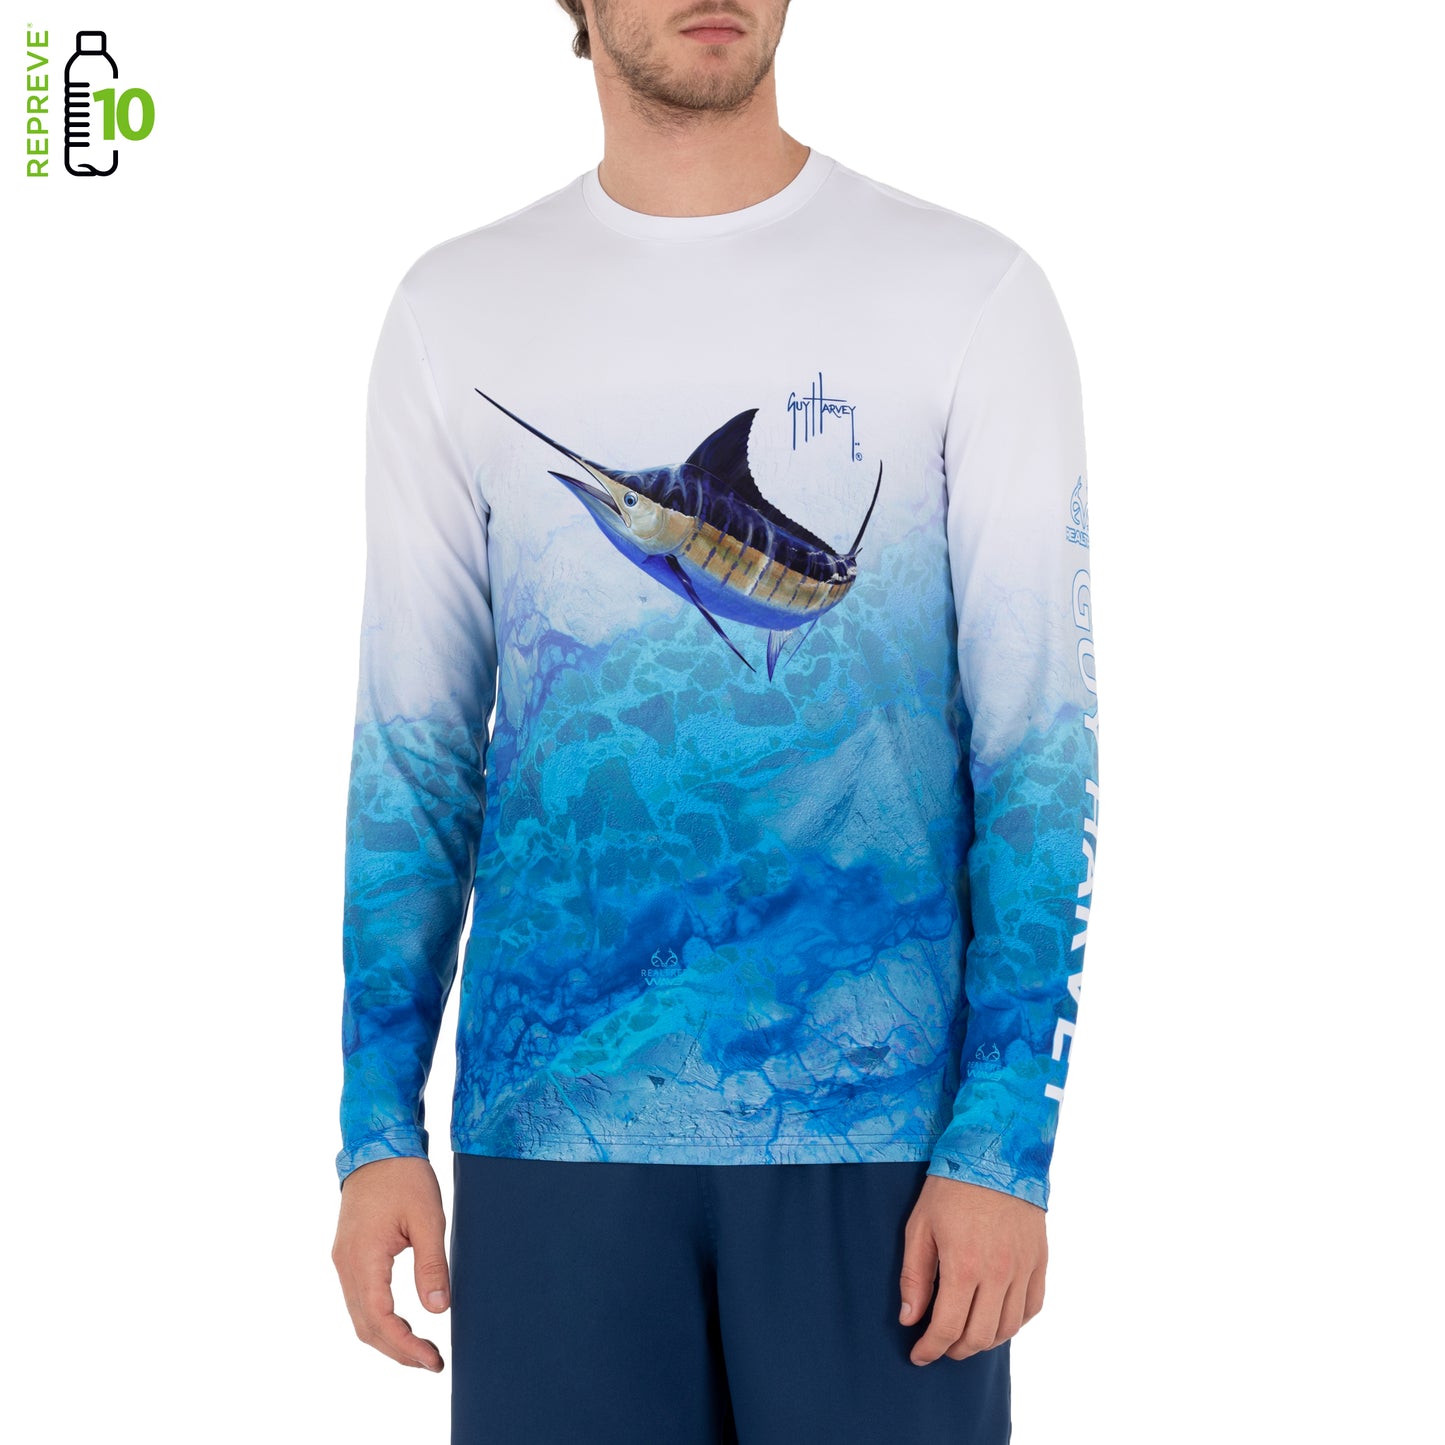 Men's Realtree Camo Marlin Light Sun Protection Long Sleeve Shirt View 1